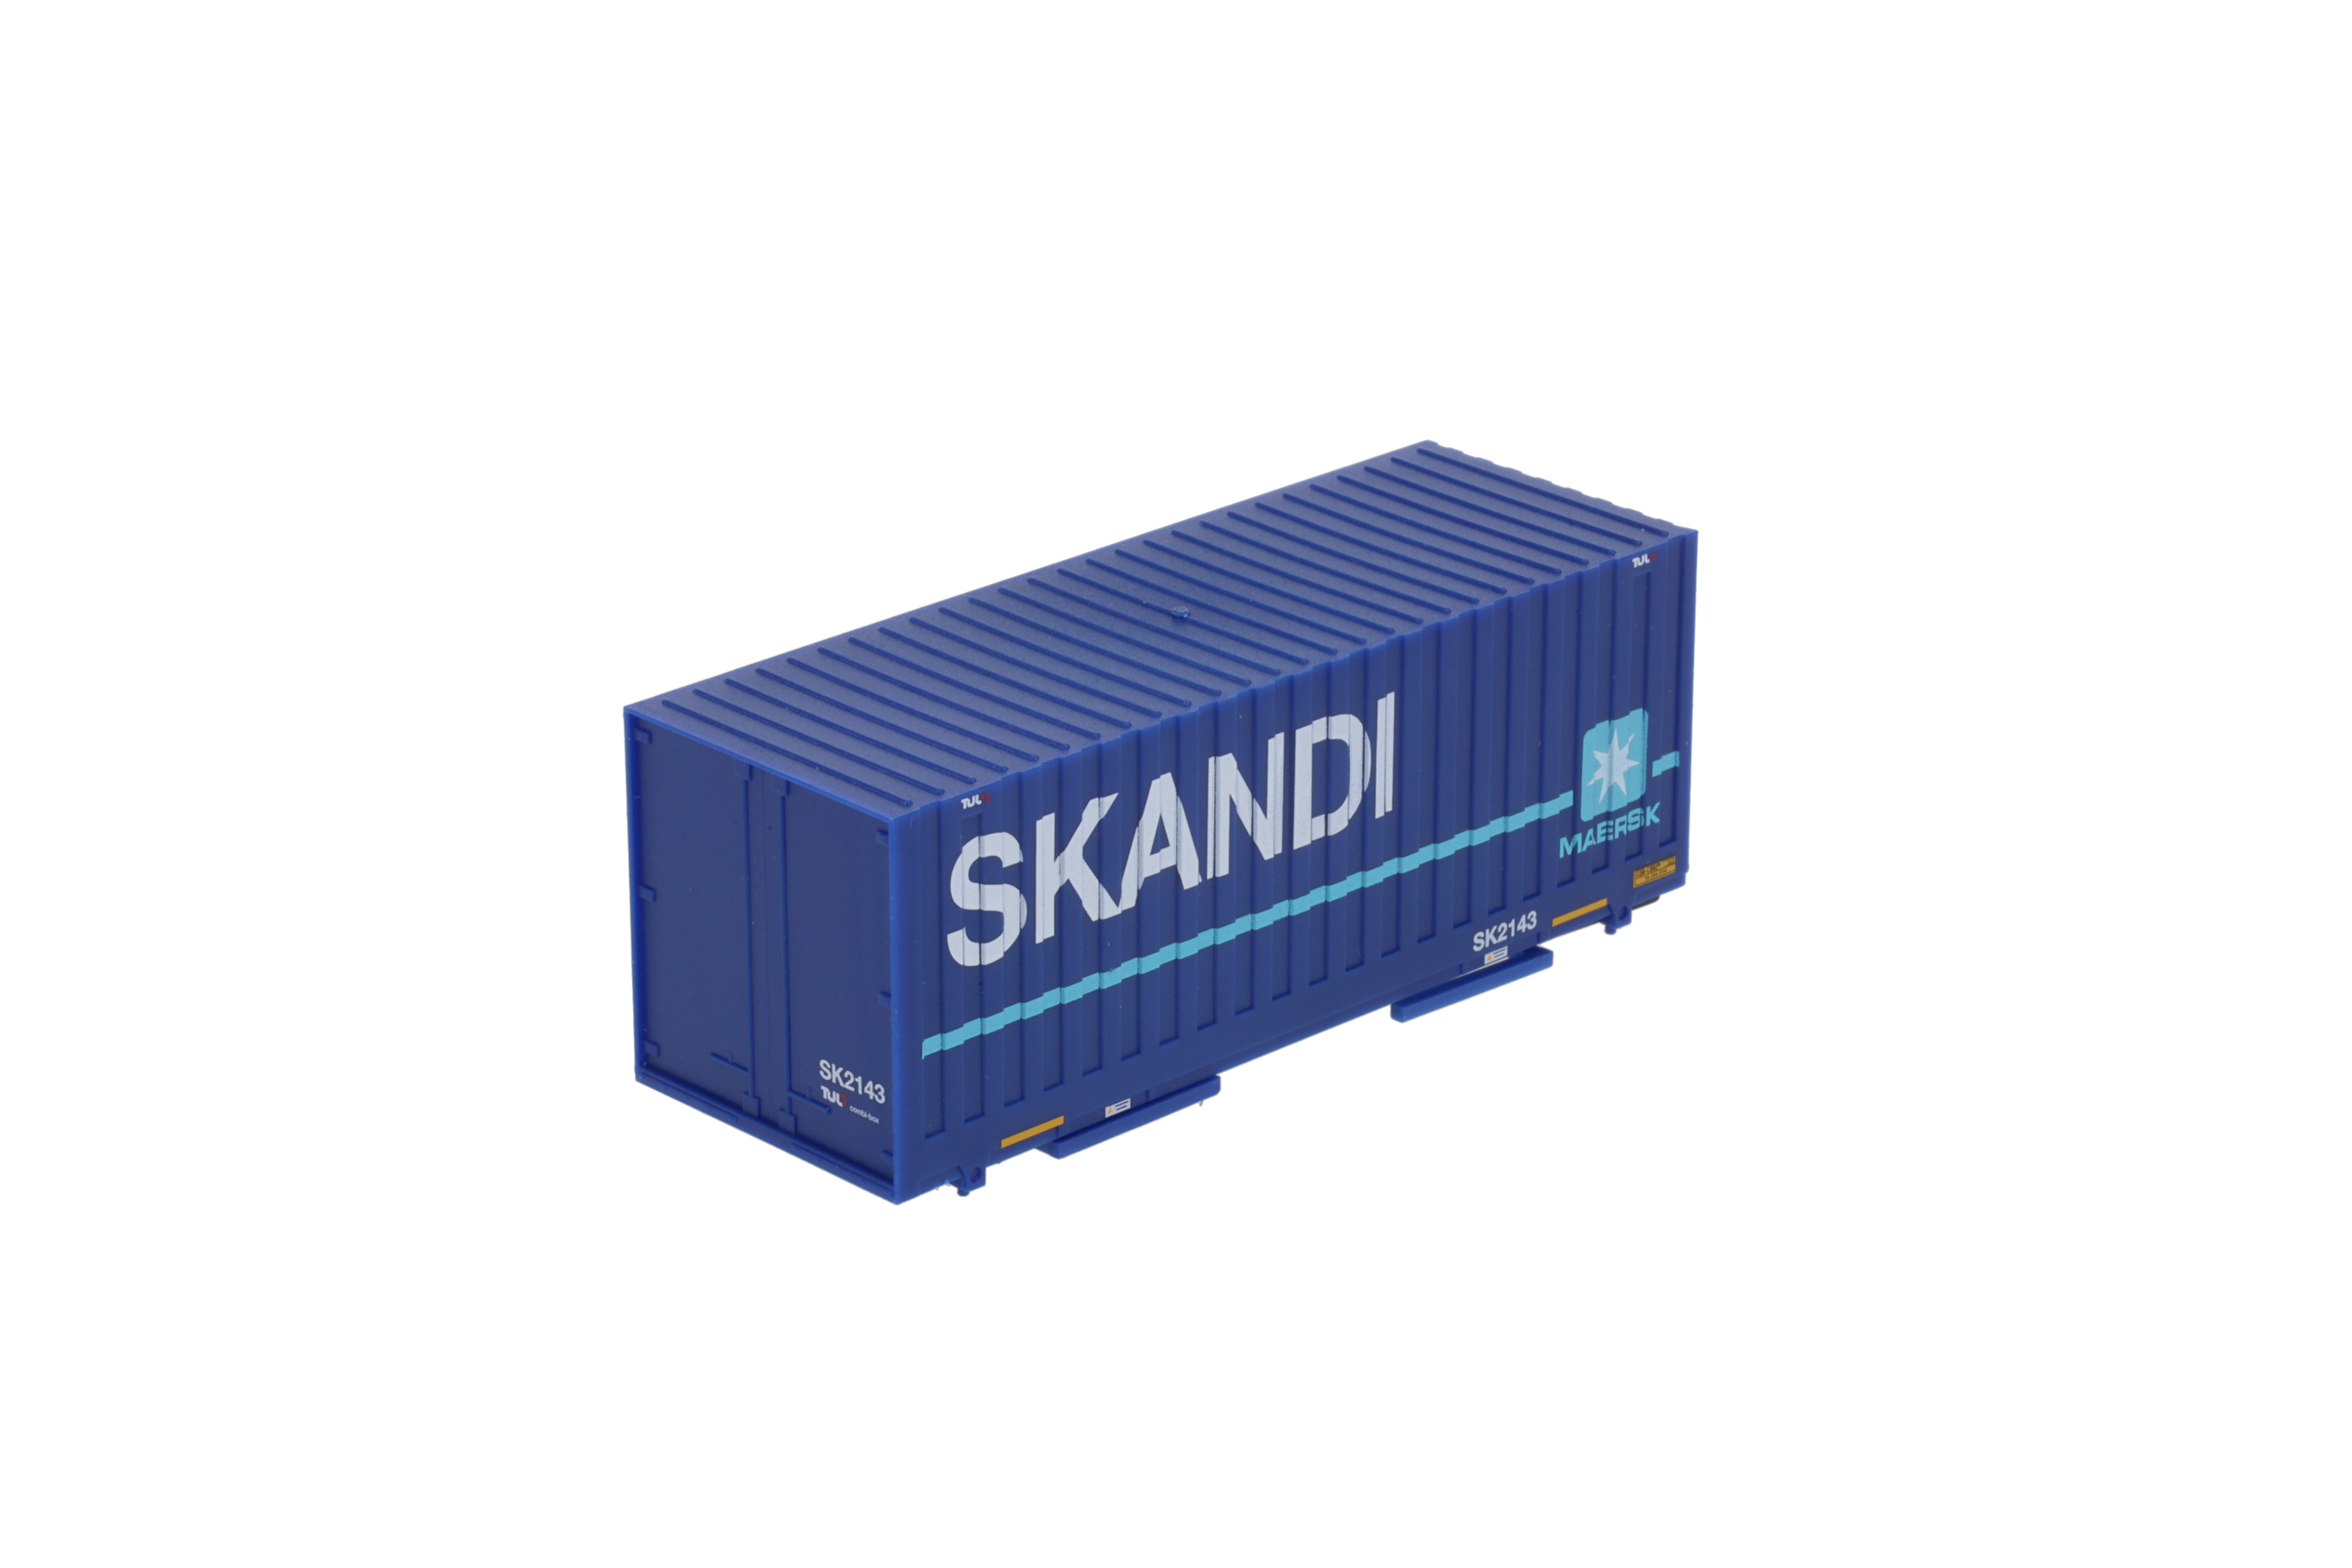 1:87 Wechselbe WB-C715 SKANDI WB-C 715 Tulo Combi-Box, blau, mit Maersk Logo, Behälter-Nr: SK 2143